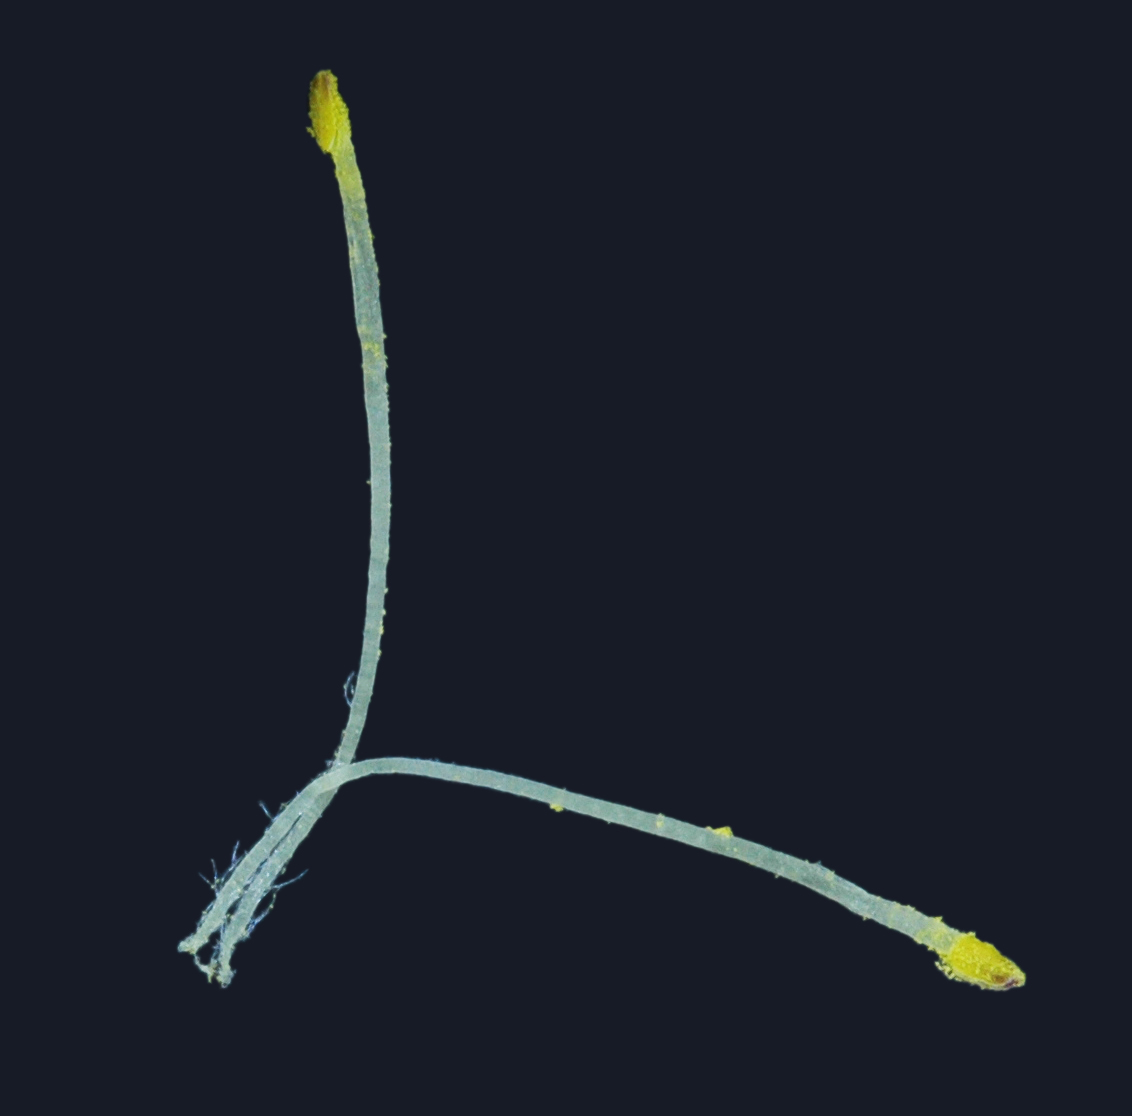 Salix cinerea / Salice cinereo